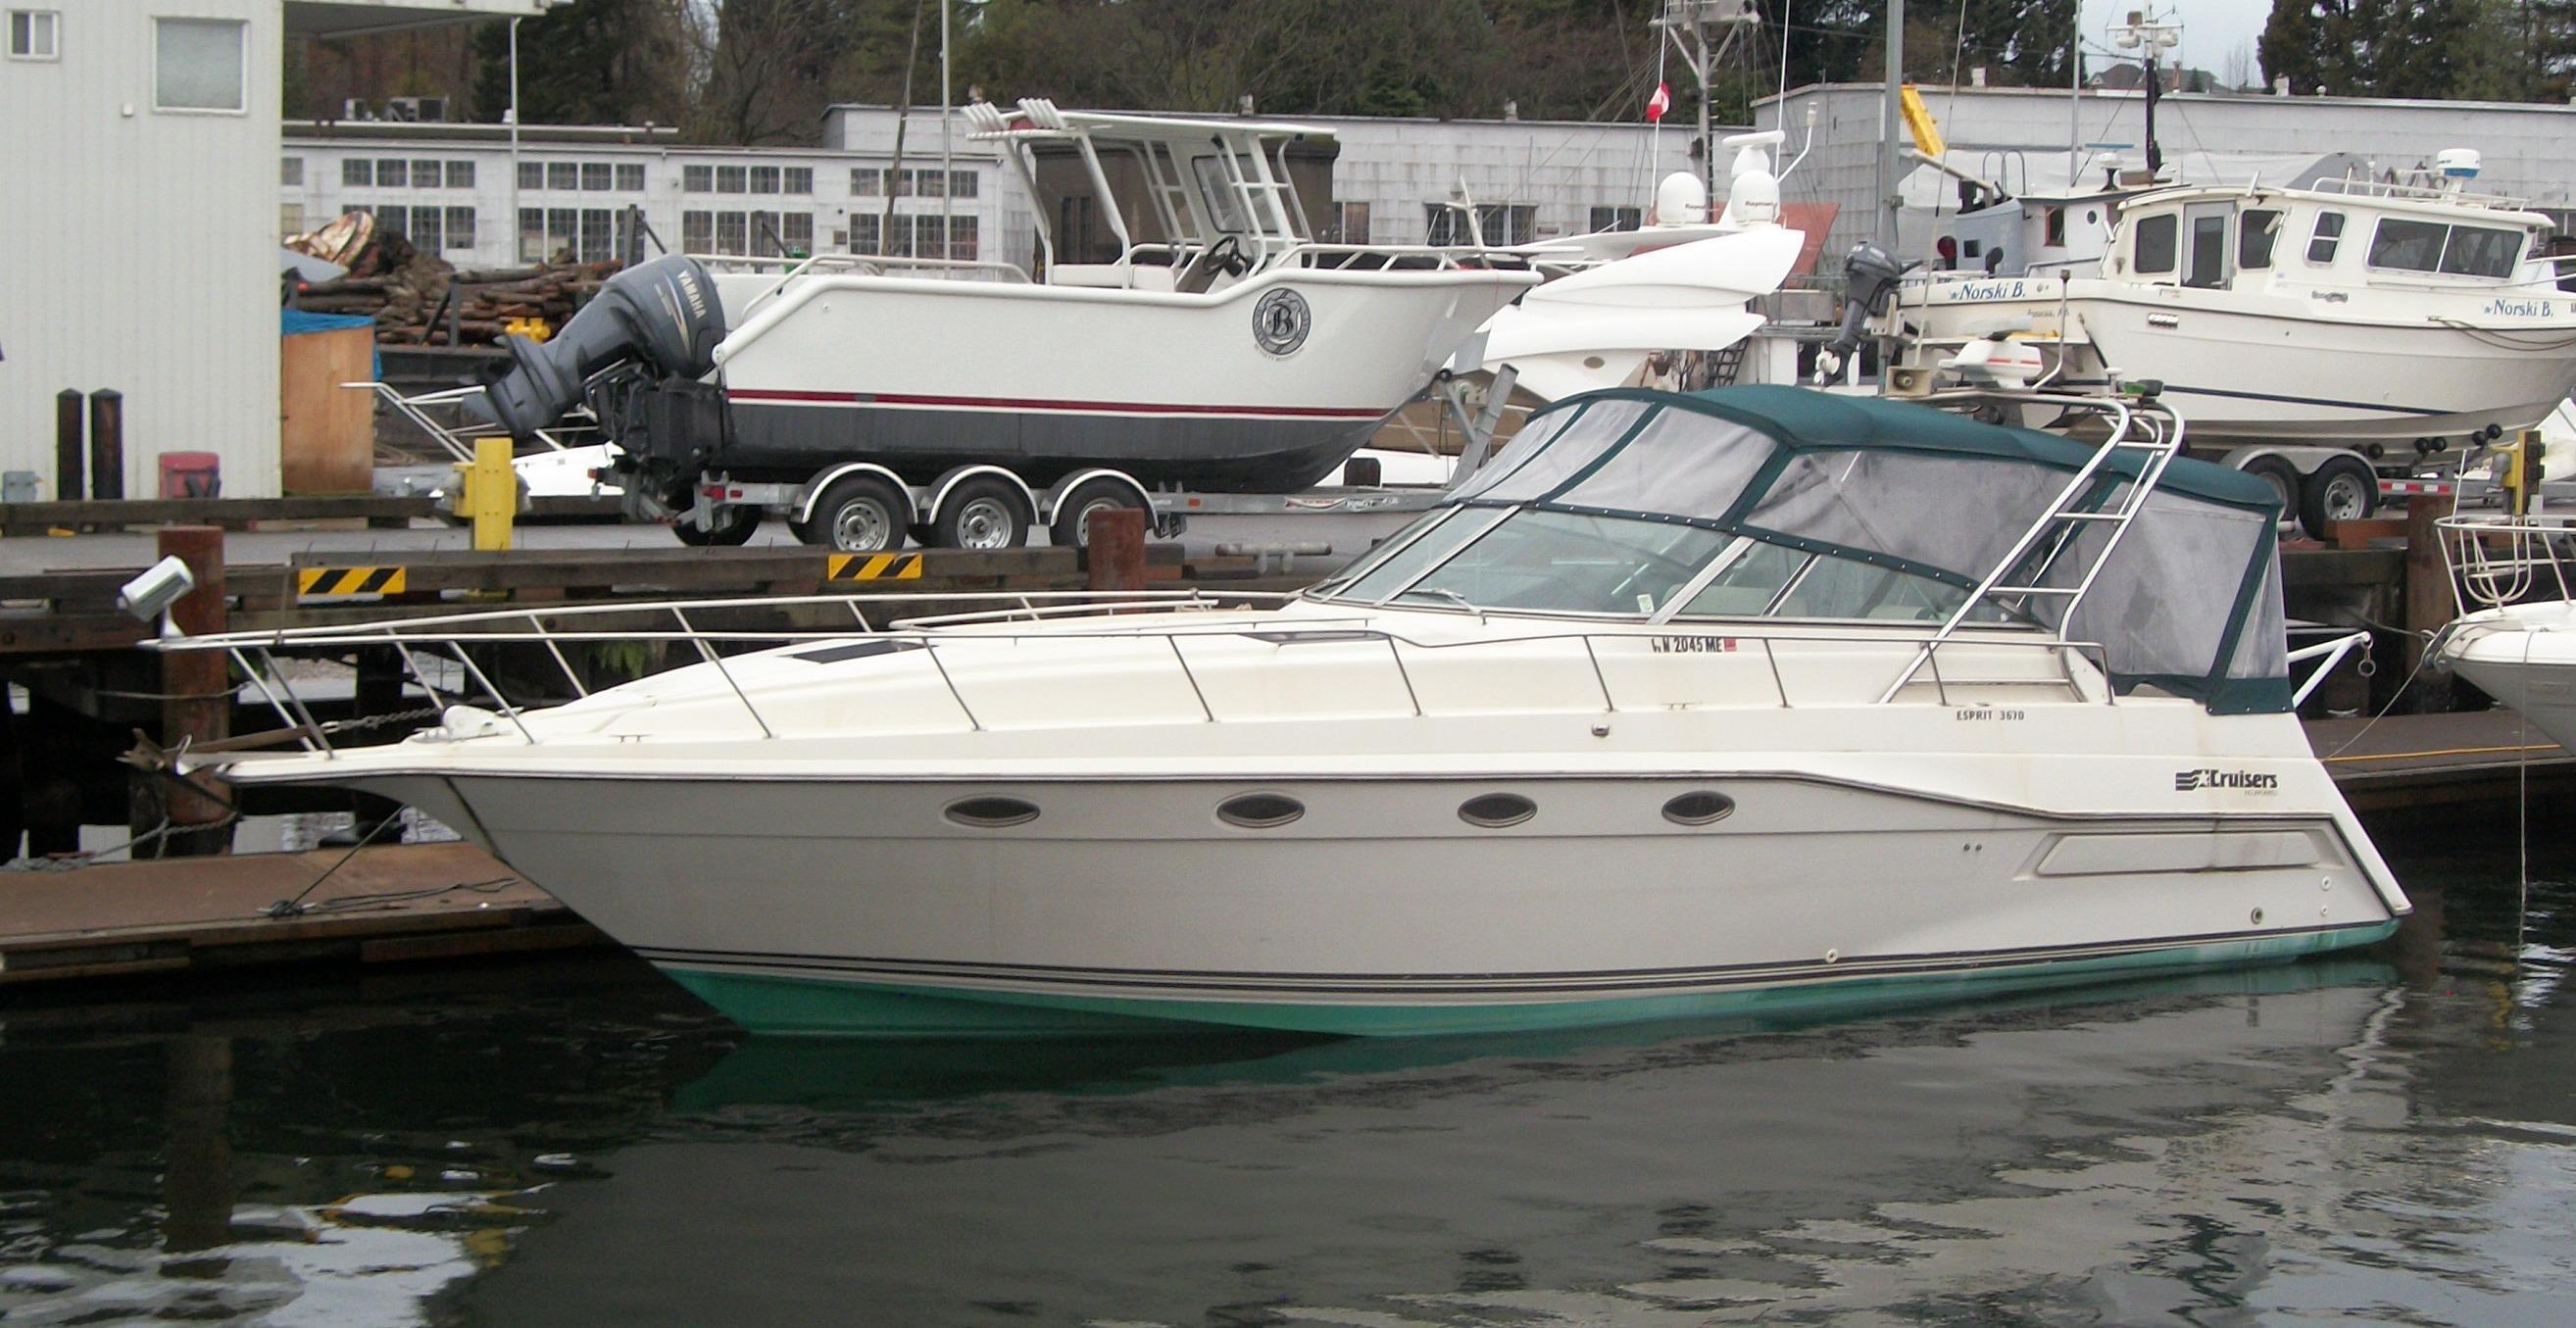 Cruisers 3670 Esprit, Seattle